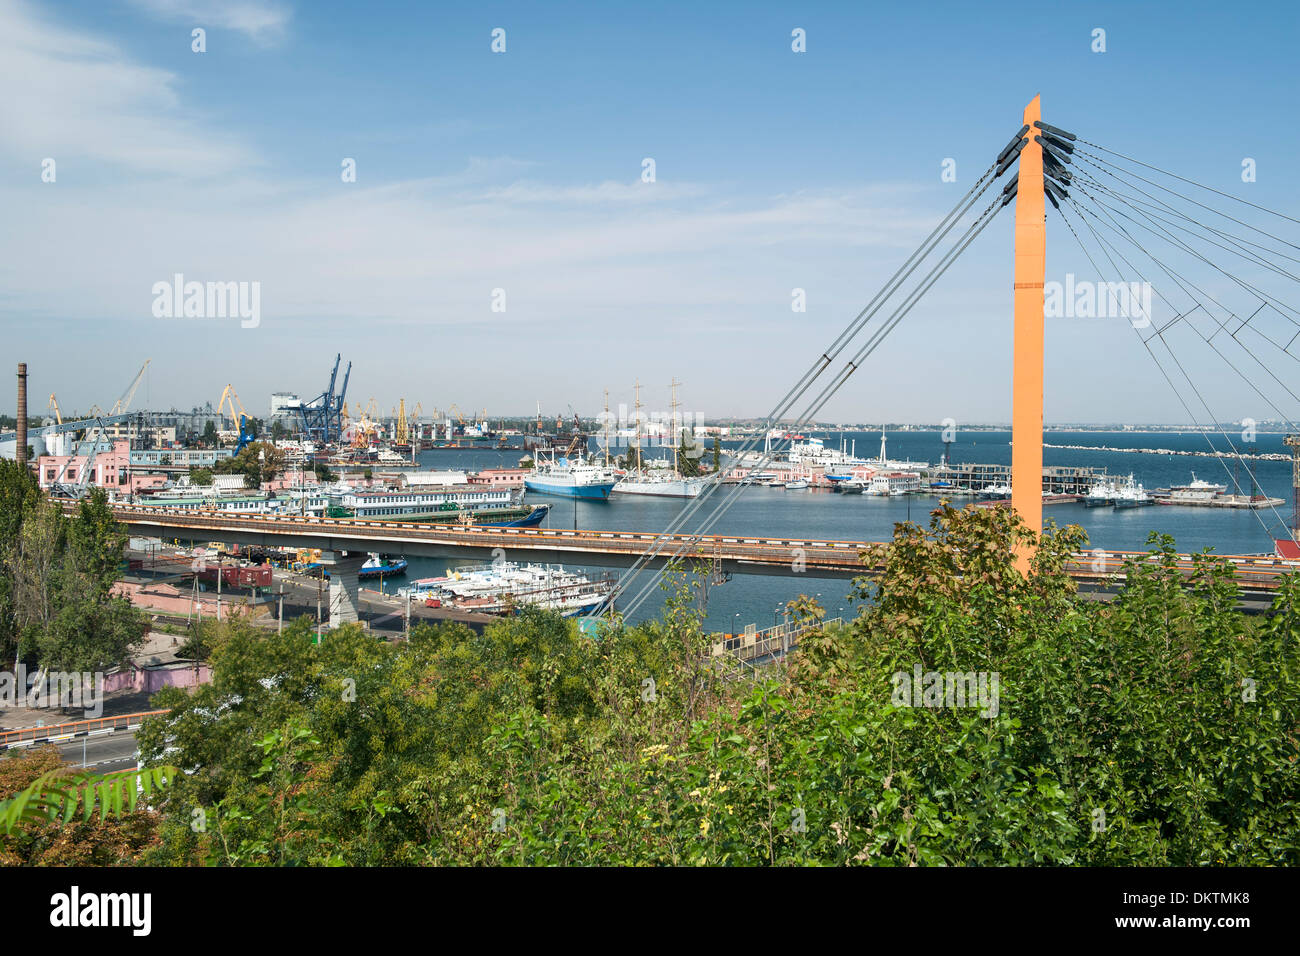 The port of Odessa on the Black Sea coast of Ukraine. Stock Photo